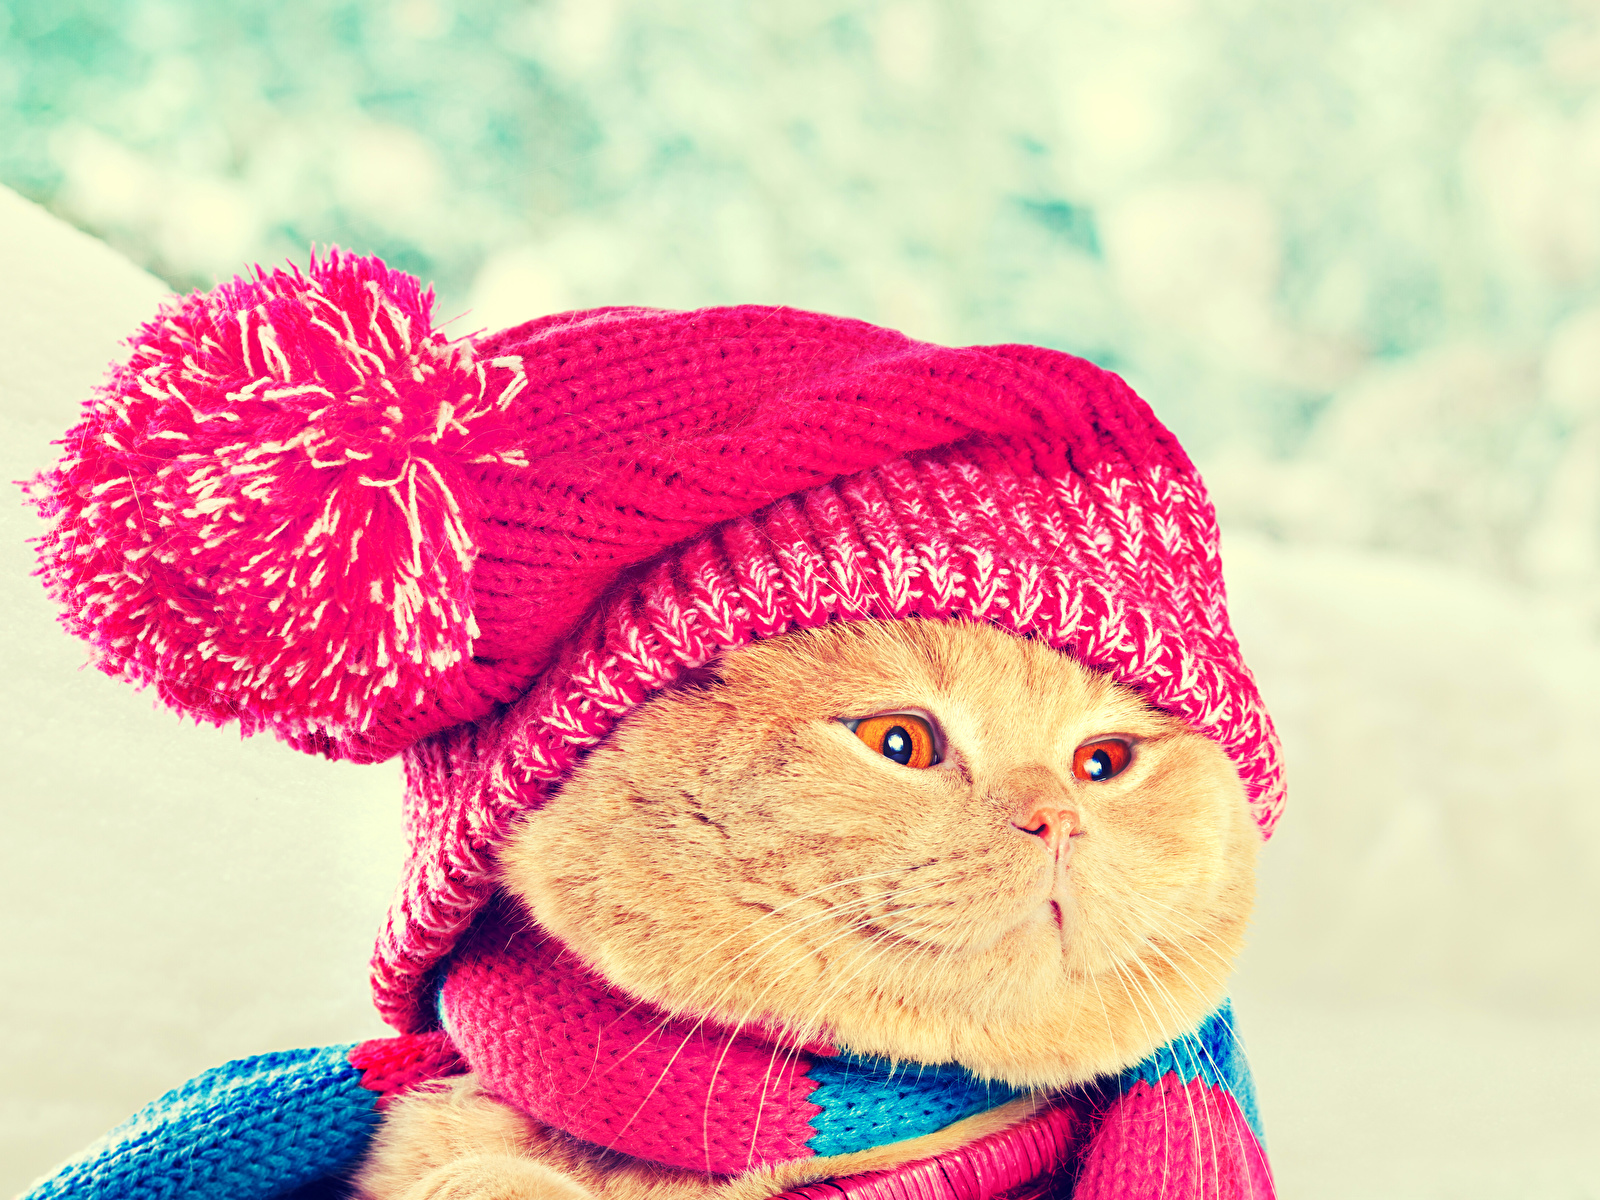 https://s1.1zoom.ru/b5050/864/Cats_Ginger_color_Winter_477157_1600x1200.jpg